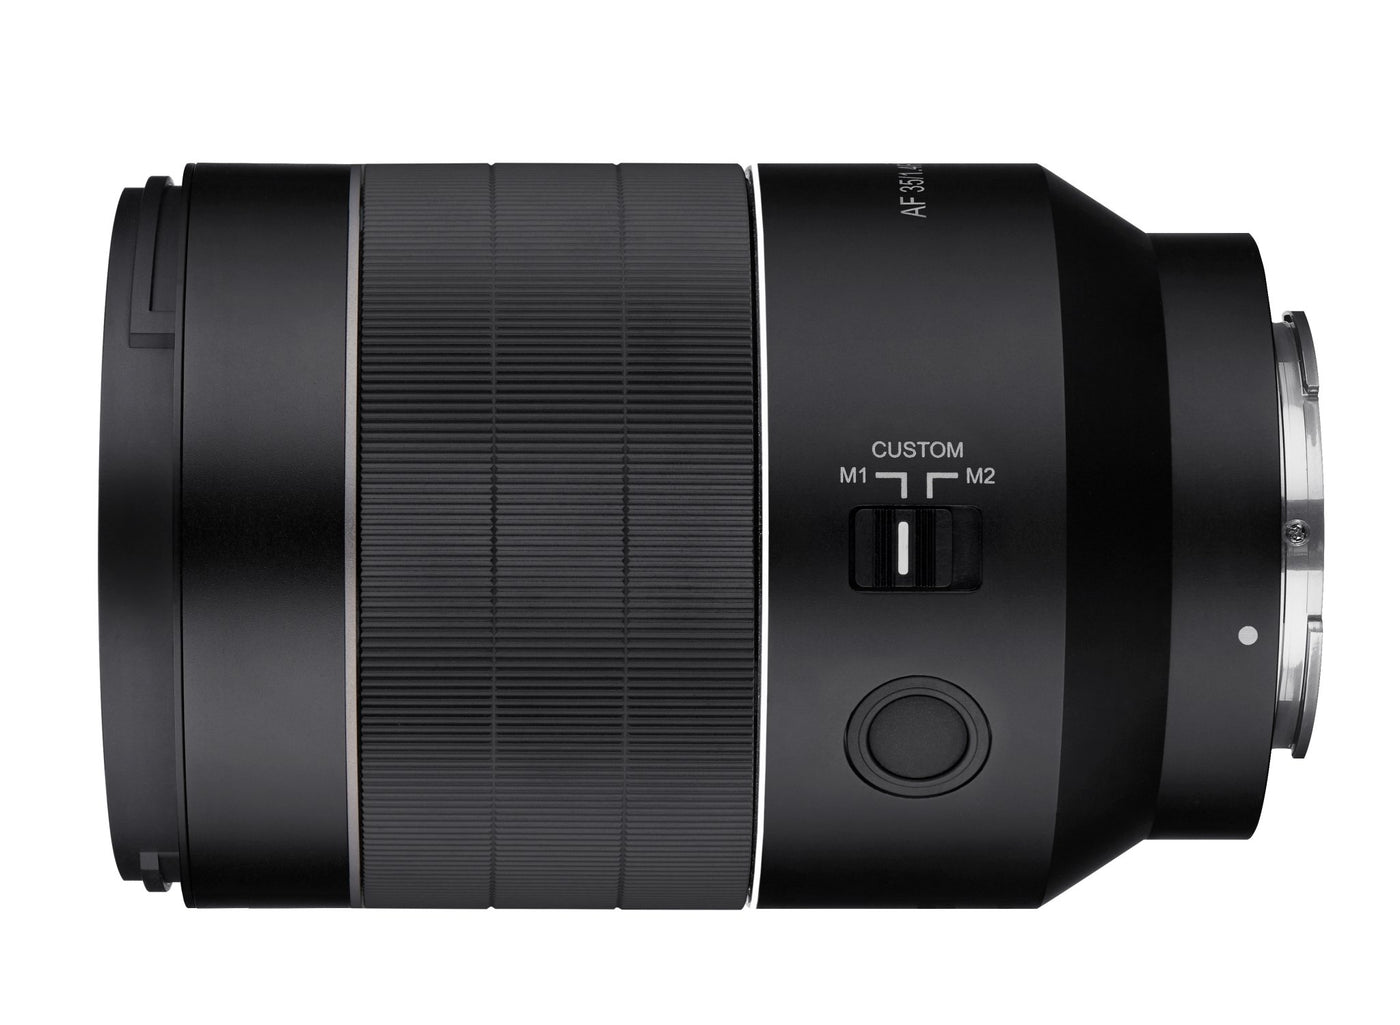 35mm F1.4 AF Series II Full Frame Wide Angle (Sony E) - Rokinon Lenses - IO35SE2-E